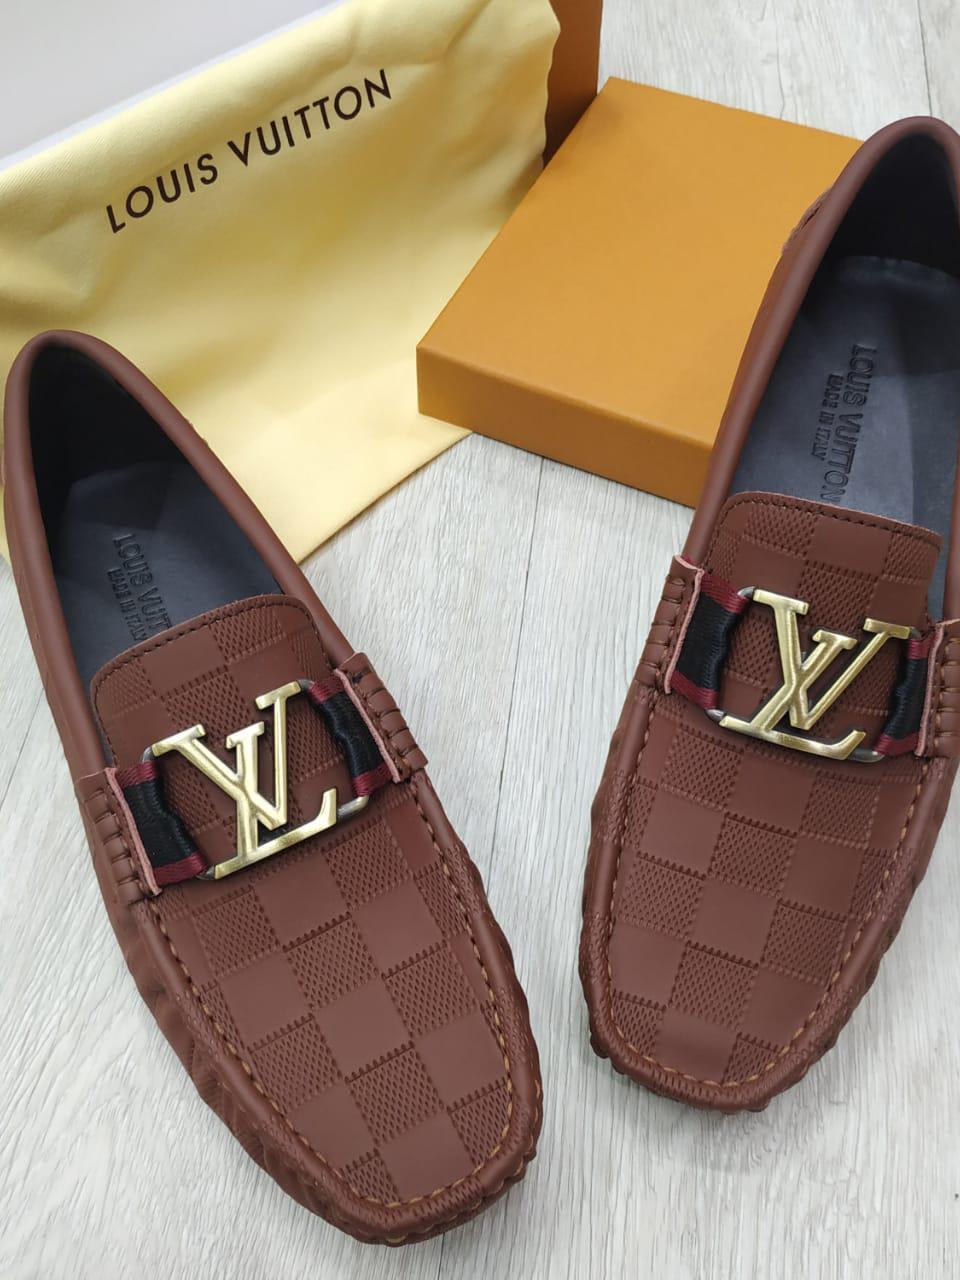 Harga Sepatu Louis Vuitton Wanita Originally